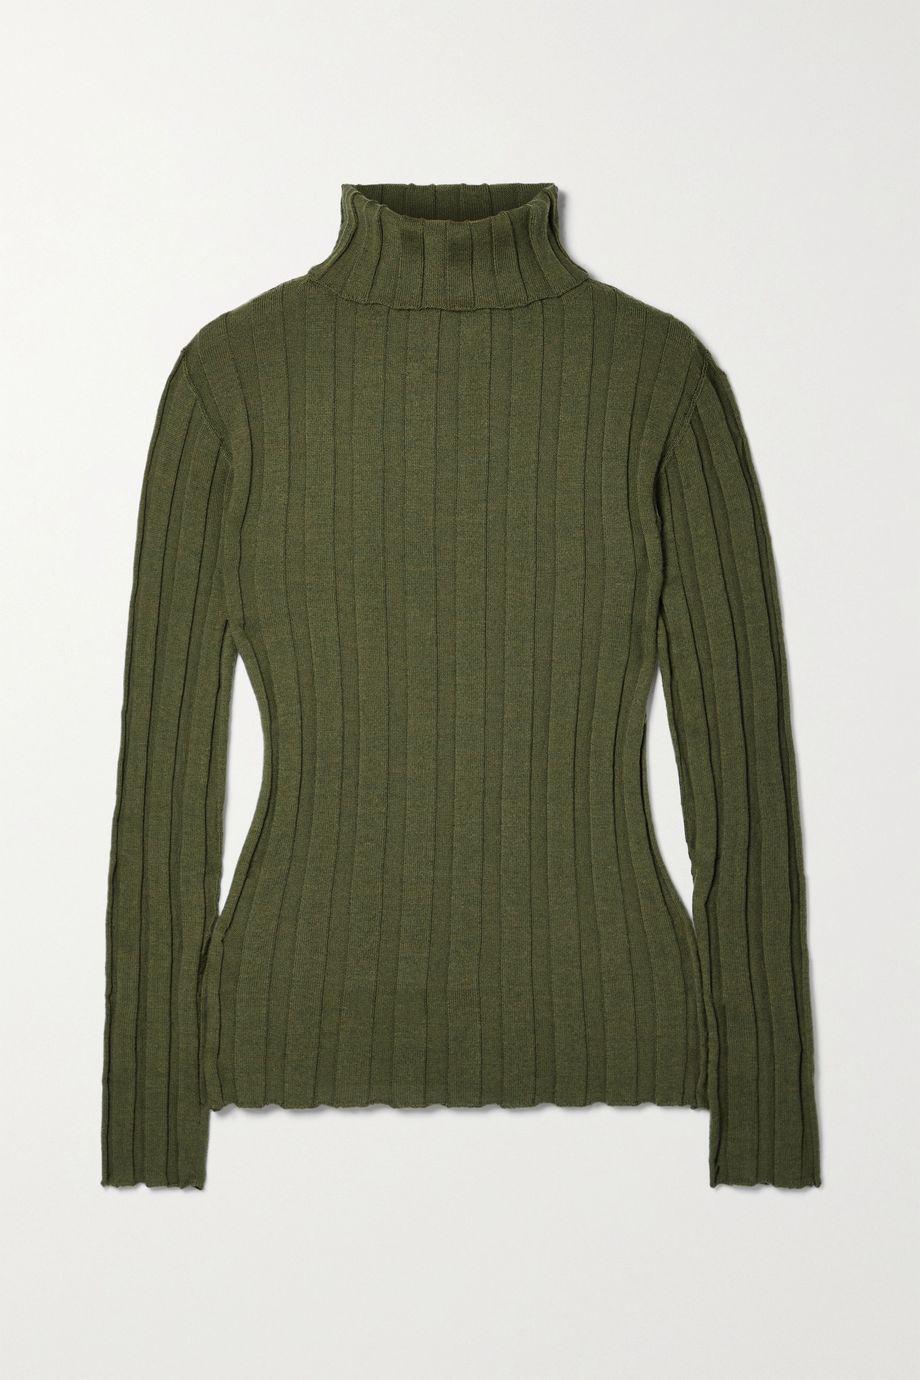 Adler merino wool turtleneck sweater by BASERANGE